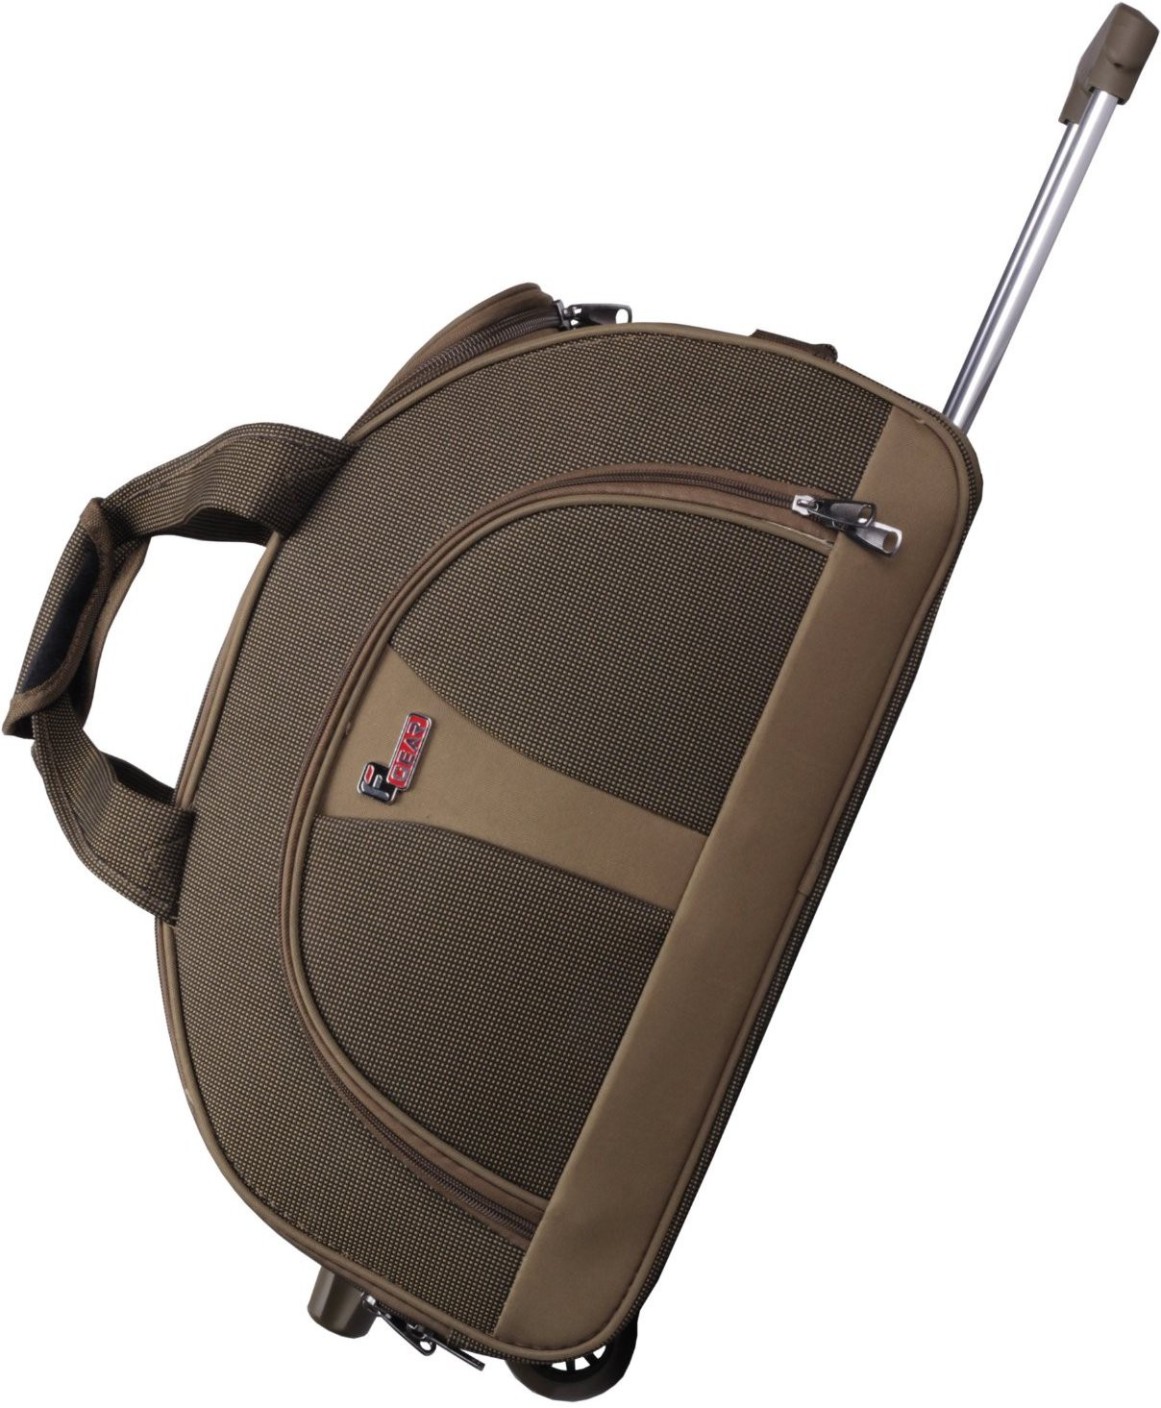 F Gear 2387a 24 inch/60 cm Travel Duffel Bag Khaki - Price in India | 0